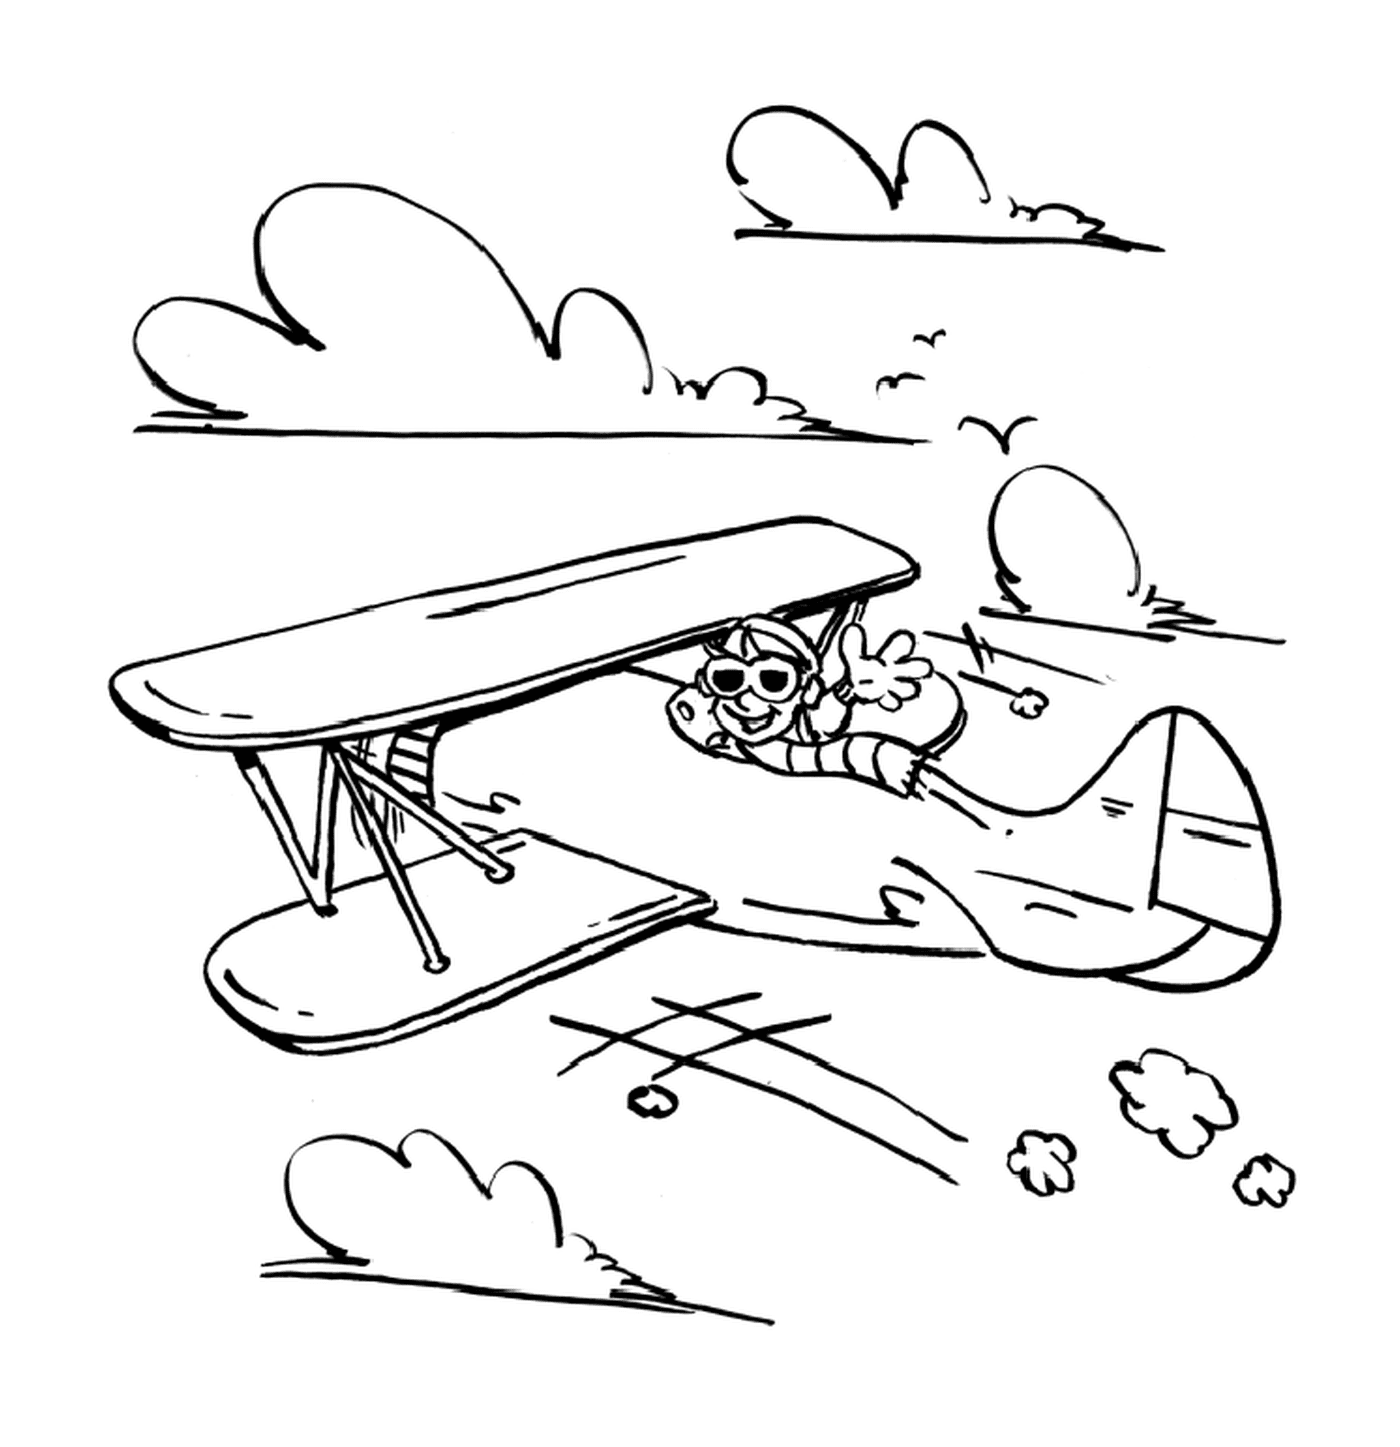  Un piccolo aereo con un pilota 